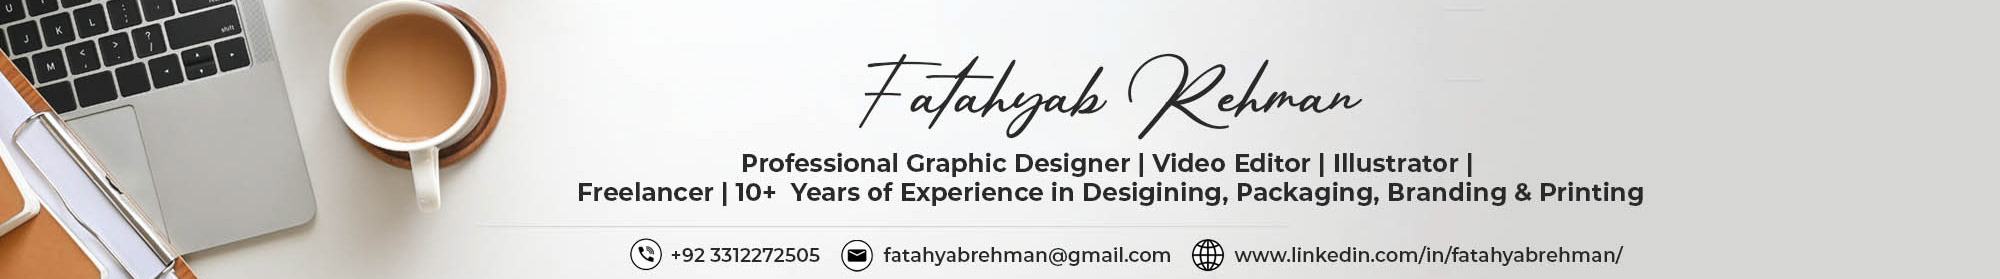 Banner profilu uživatele Fatahyab Rehman